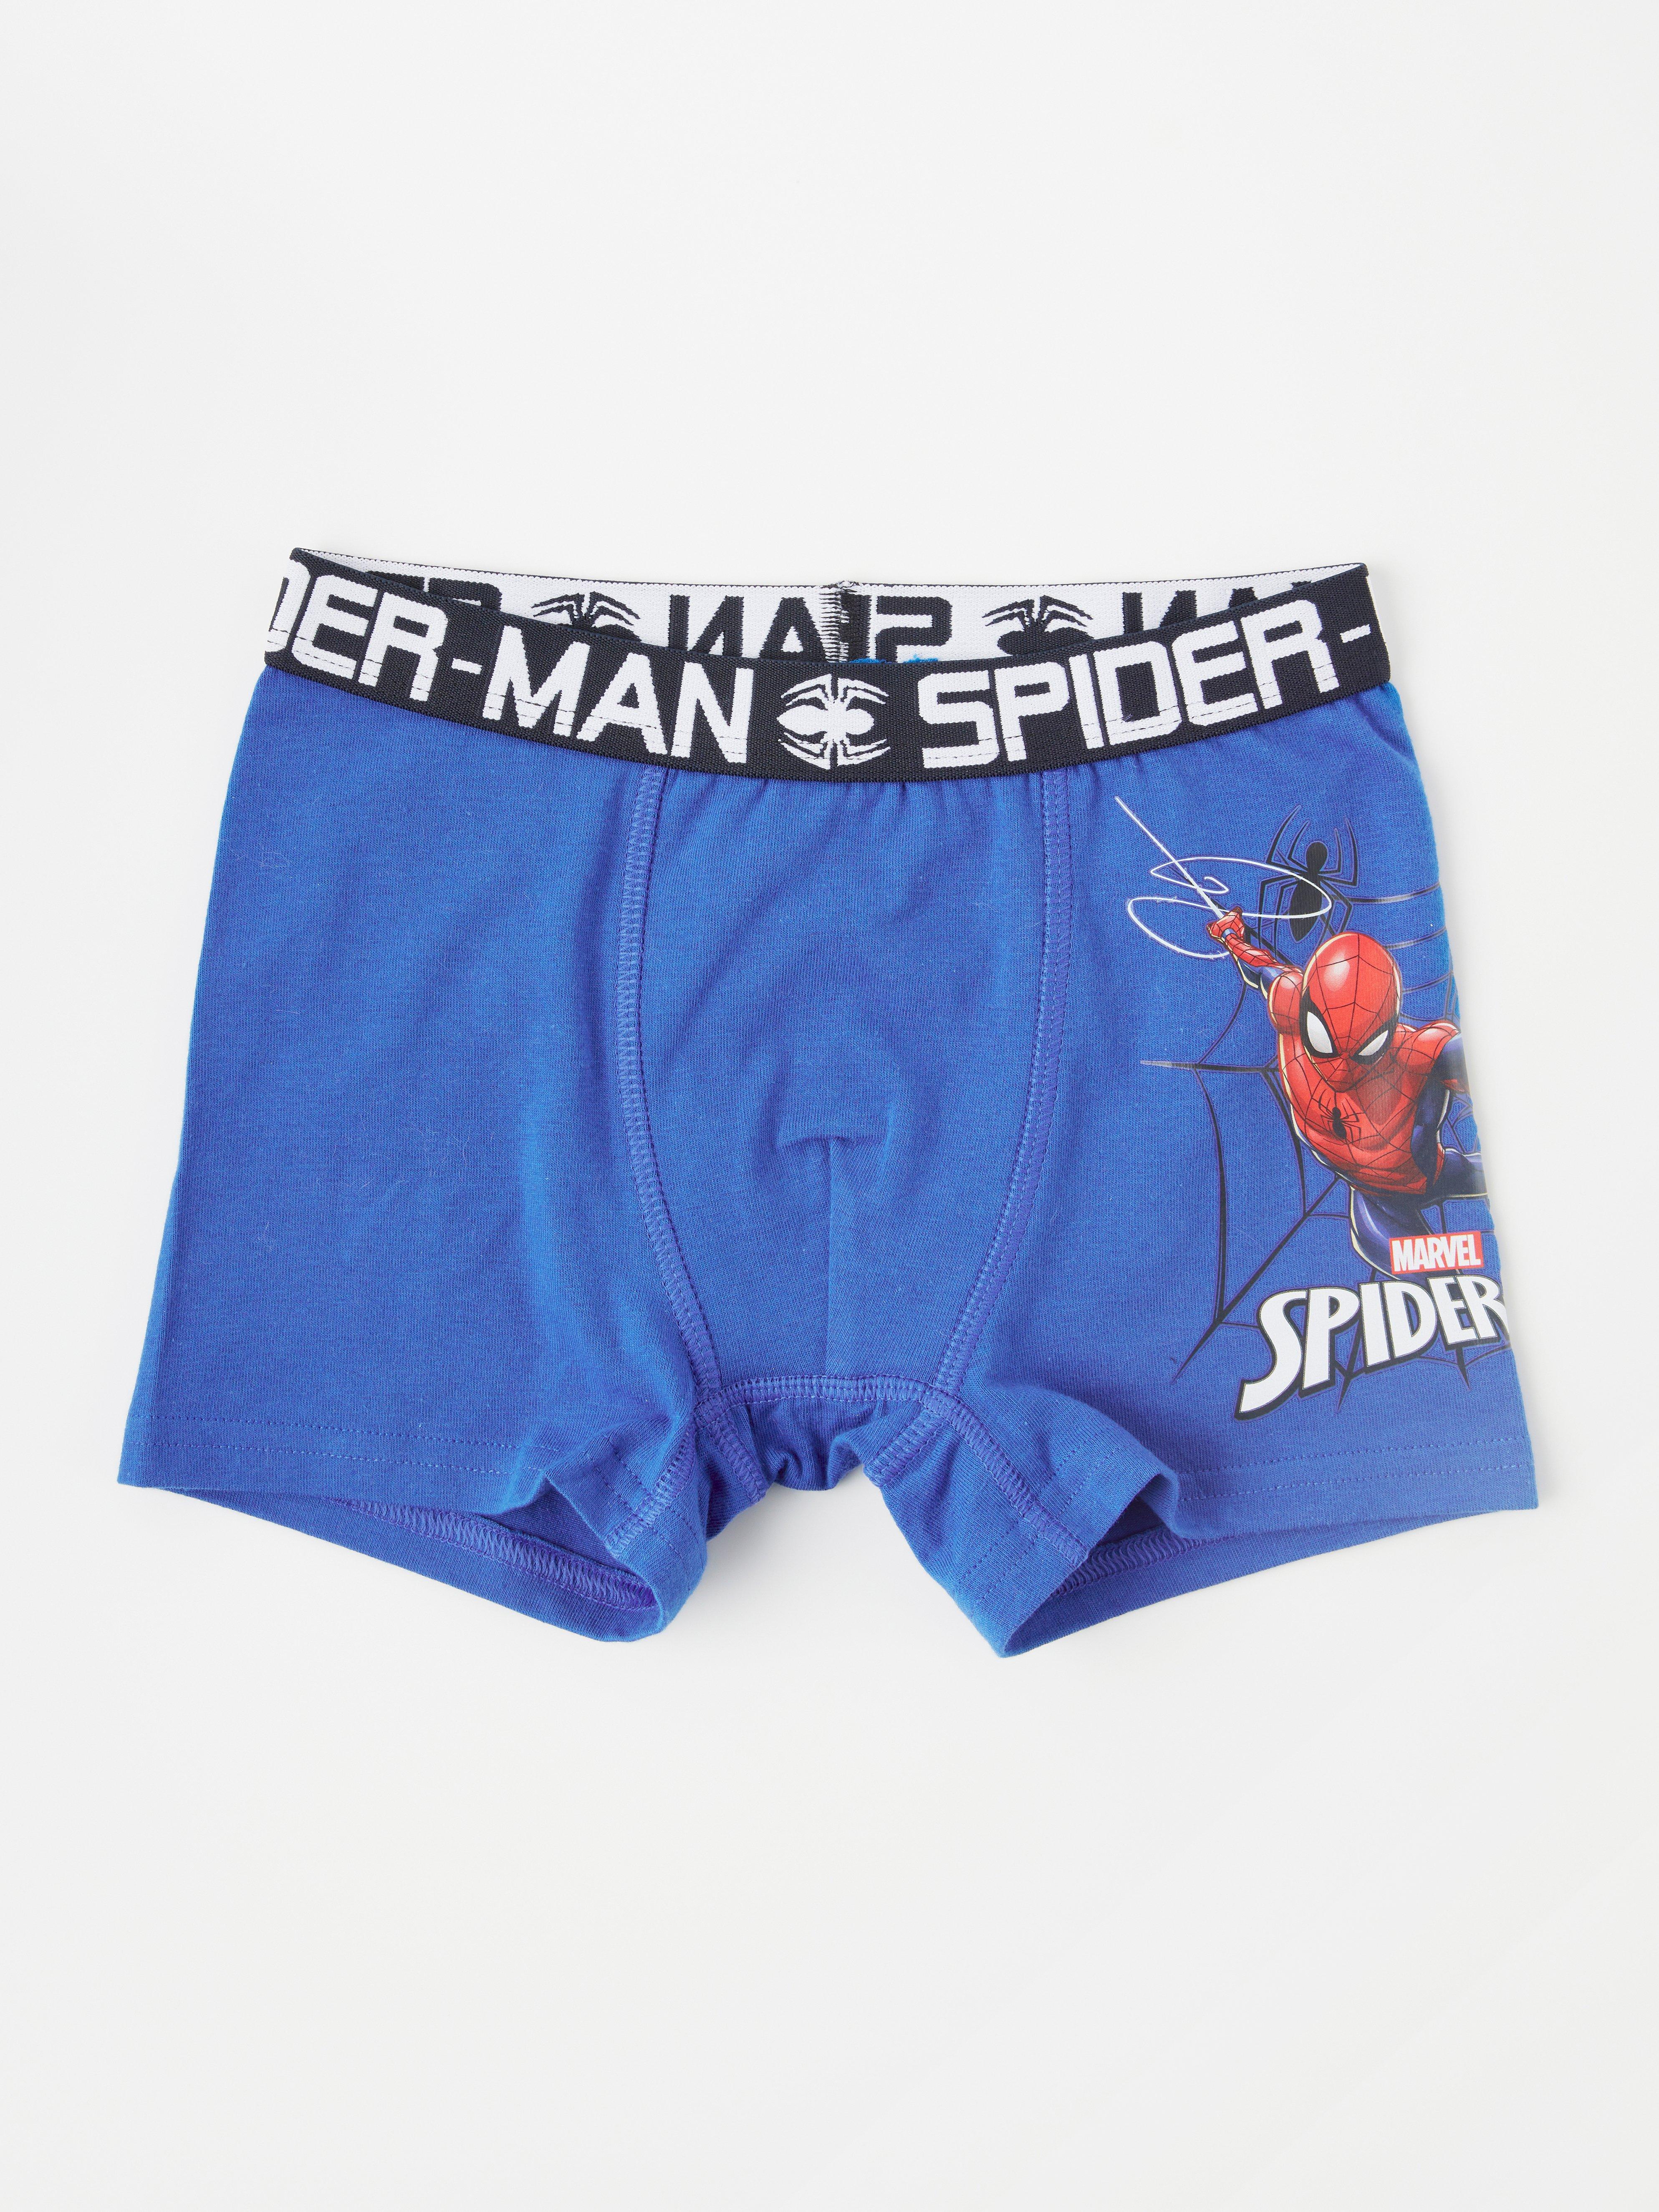 Spider-Man Men's Satin Boxers Blue